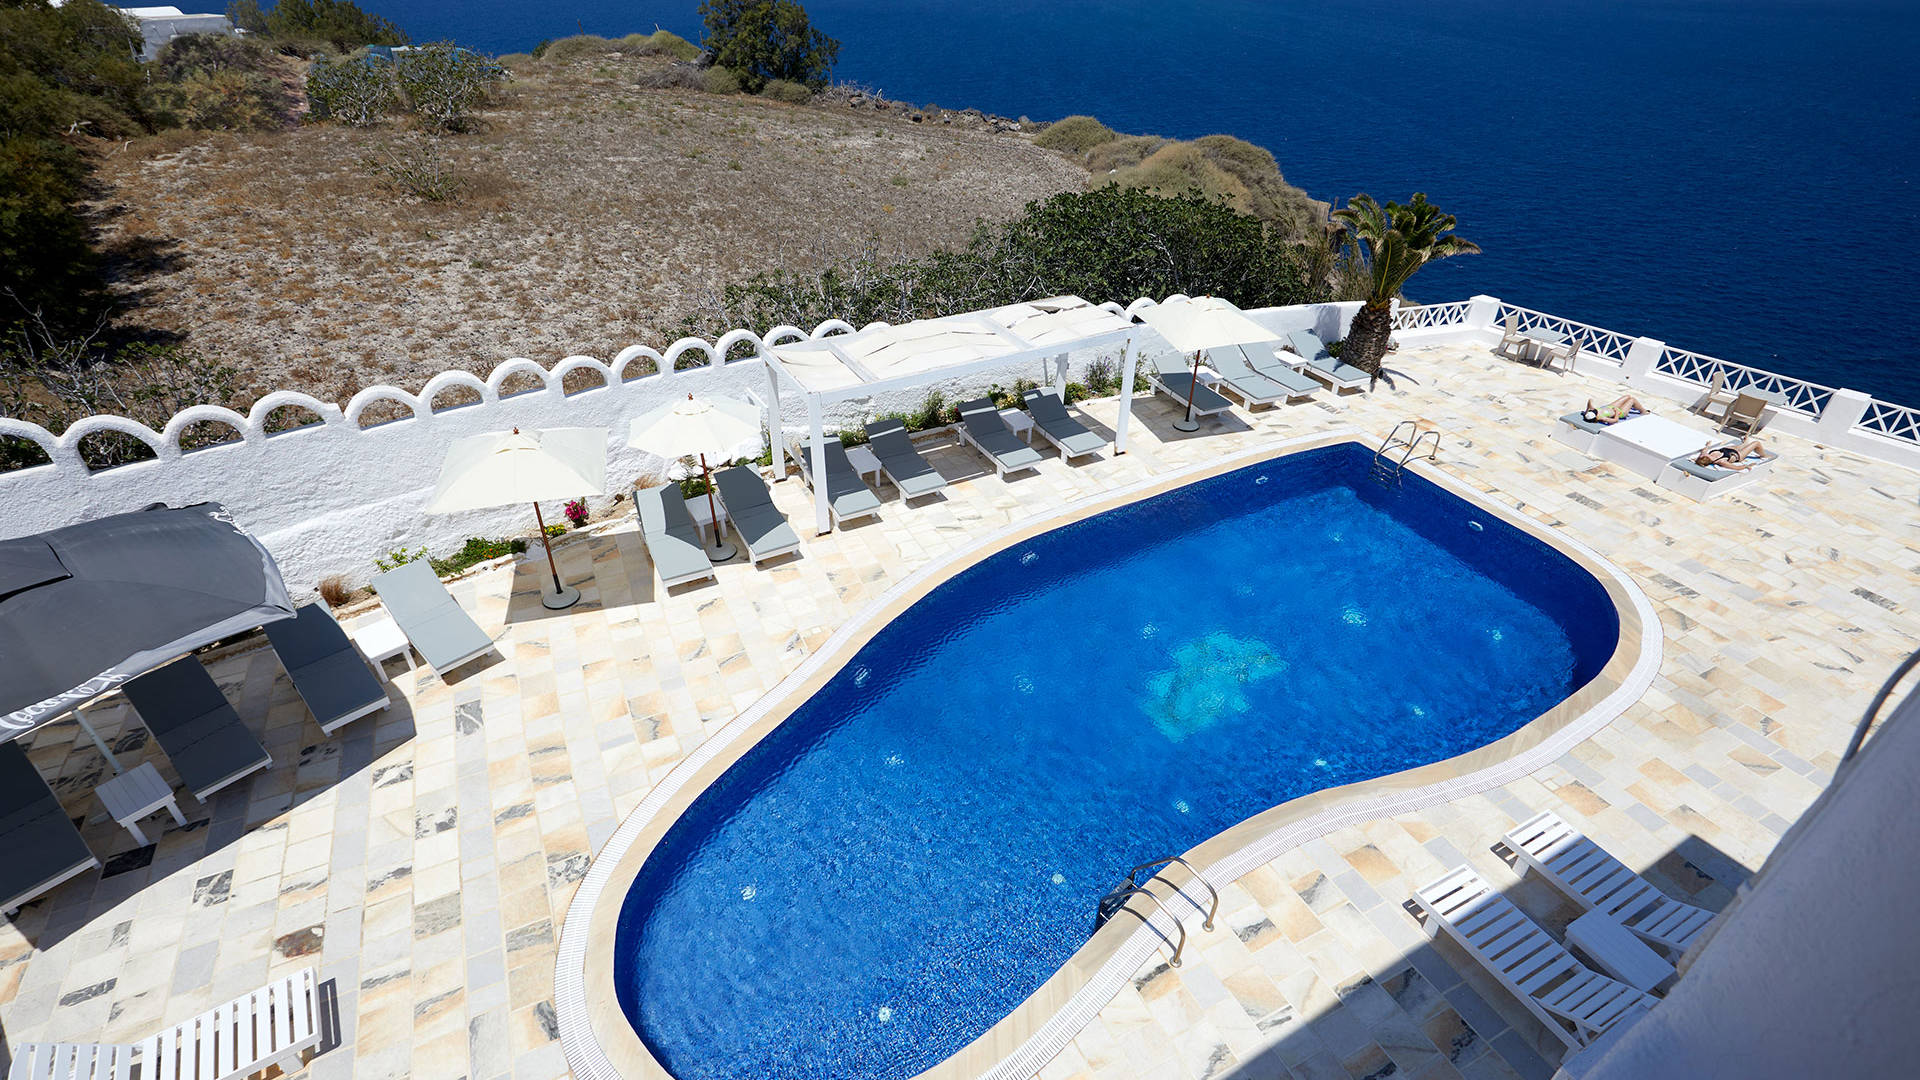 
Santorini View Hotel swimming pool area with caldera view